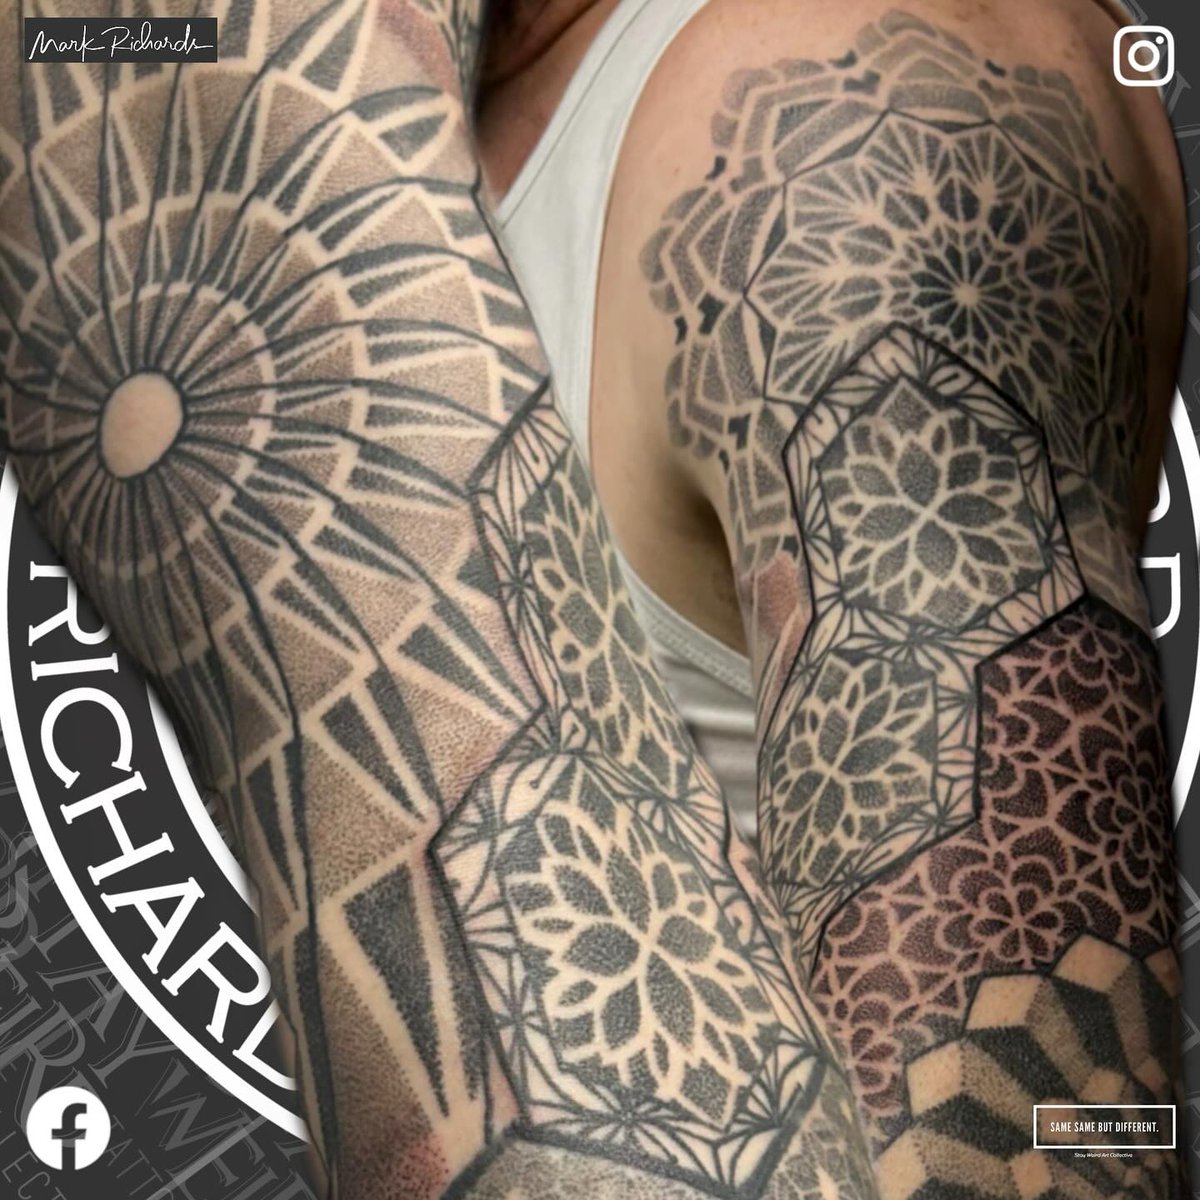 #mandalatattoo #mandala #tattoo #art #mandalaart #tattoos #ink #dotworktattoo #mandalas #inked #dotwork #tattooartist #blackwork #artist #mandaladrawing #tattooart #mandalaartist #mandalalove #tattooed #mandalapassion #geometrictattoo #sharing #blackworktattoo #mandaladesign #art